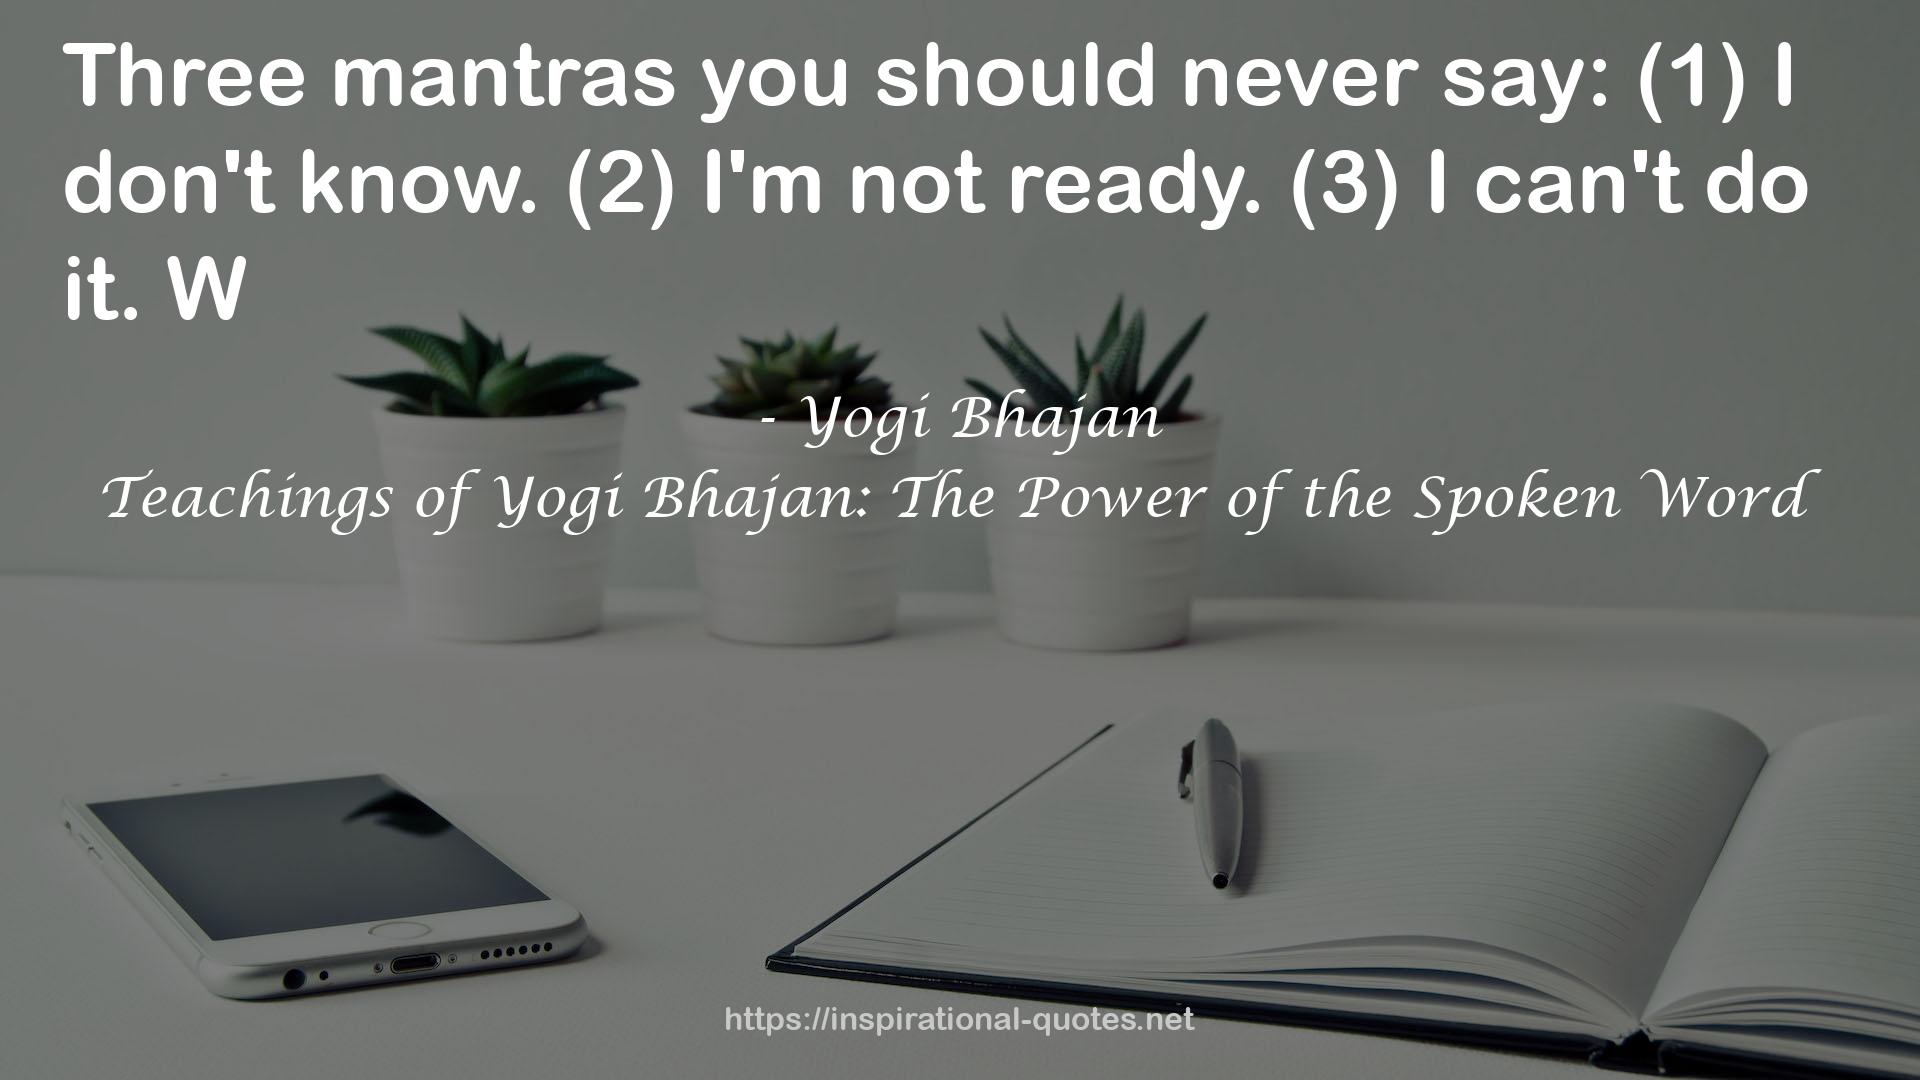 Teachings of Yogi Bhajan: The Power of the Spoken Word QUOTES